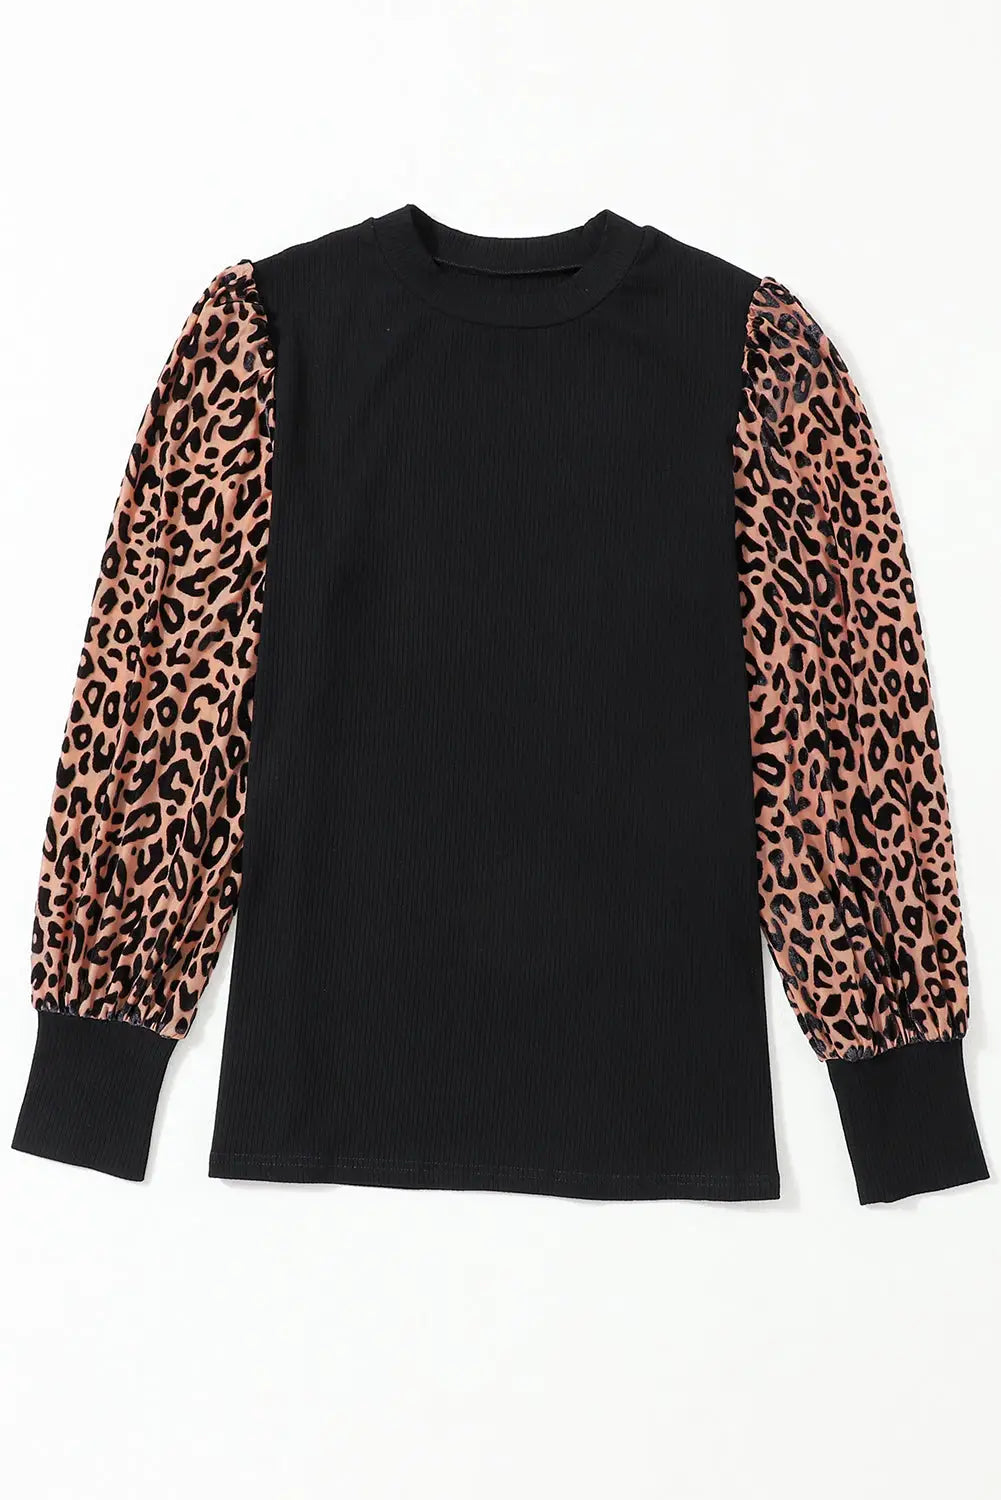 Black leopard patchwork ribbed knit mock neck plus size top